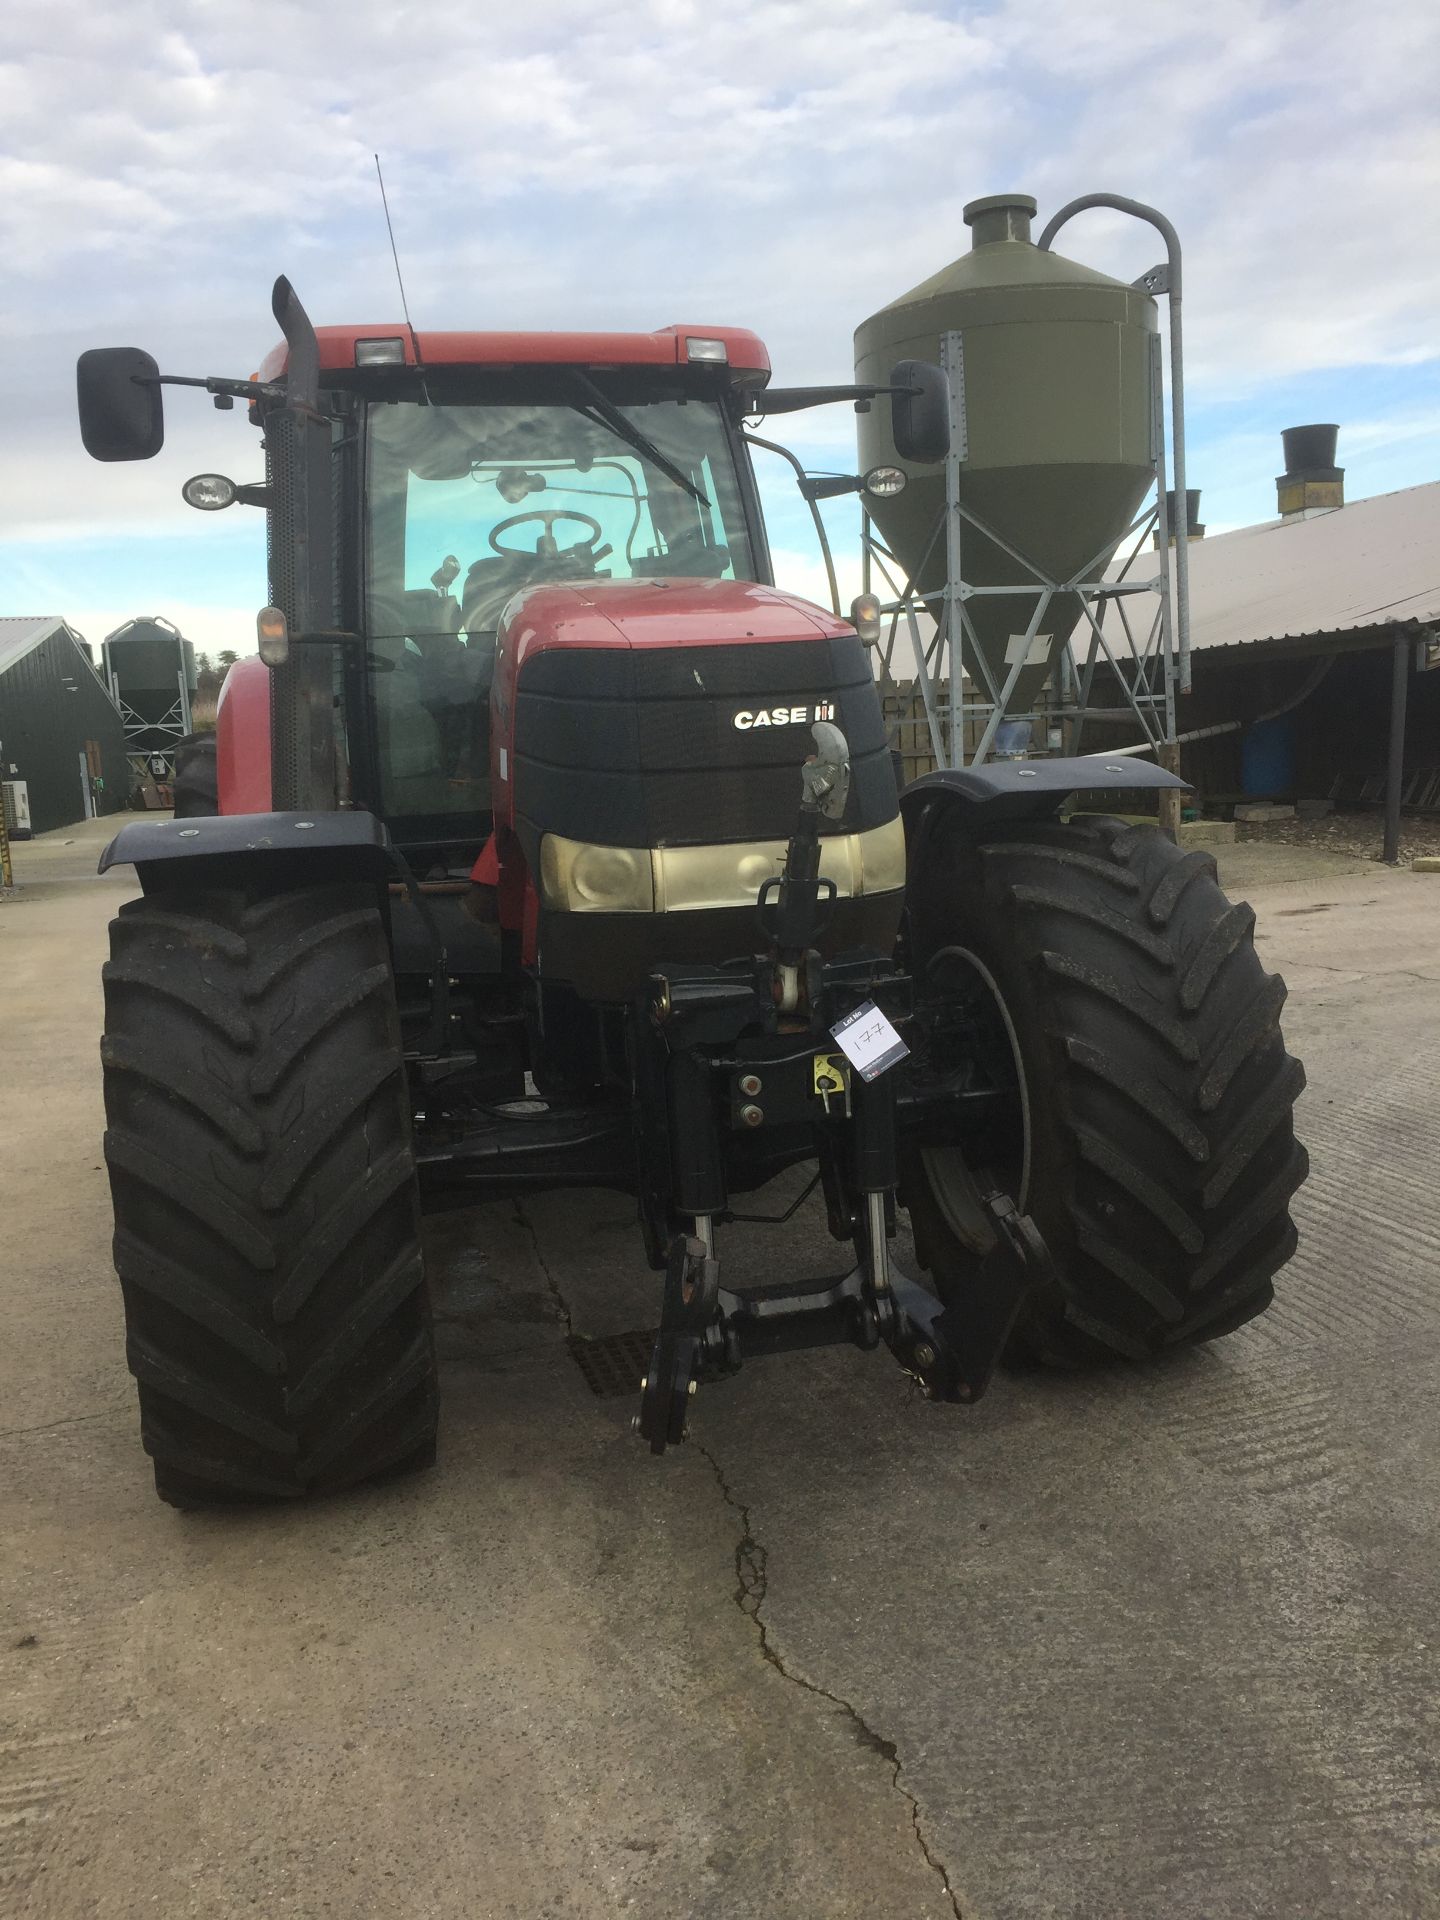 Case IH Puma 210 4wd 6728cc agricultural tractor, Registration No. YJ10 CNA (2010), 600/60/R30 (